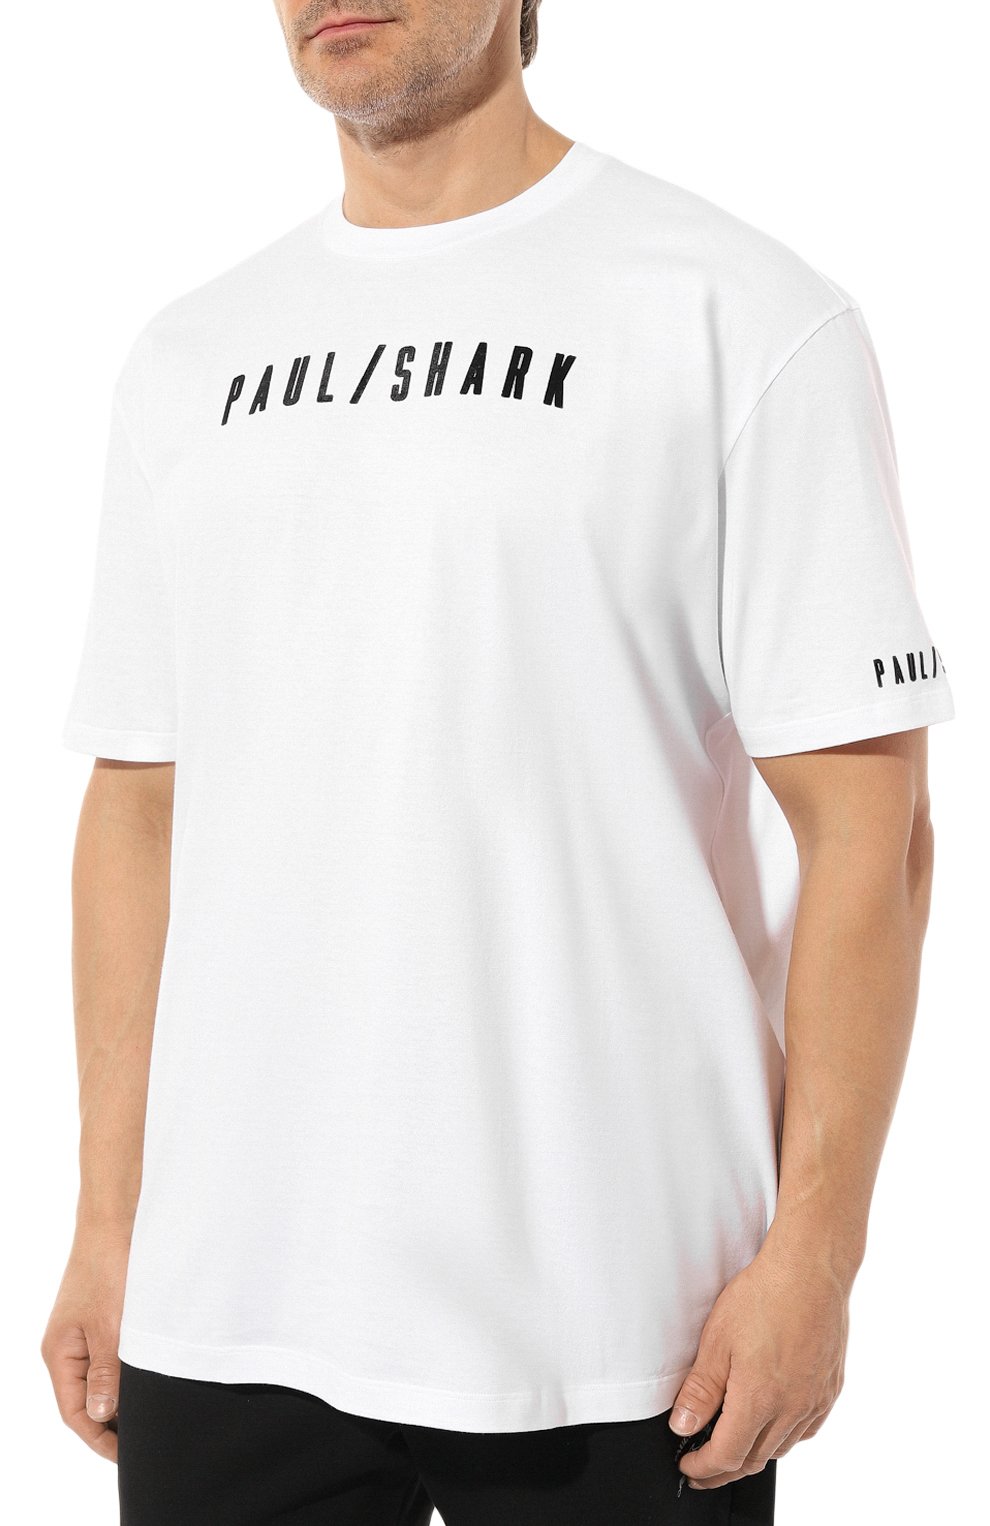 Хлопковая футболка Paul&Shark 13311622/3XL-6XL, цвет белый, размер 58 13311622/3XL-6XL - фото 3